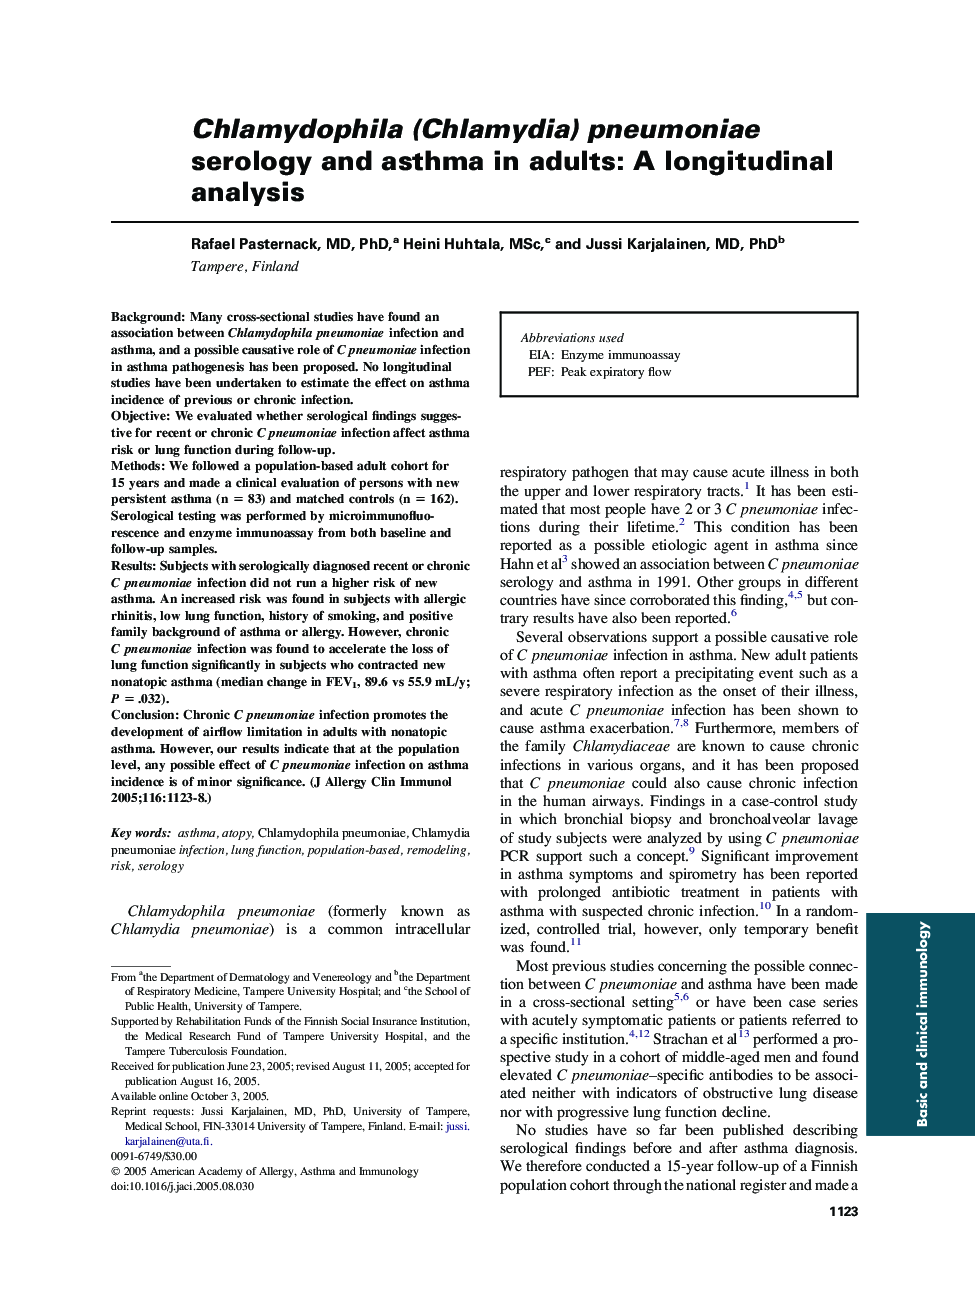 Chlamydophila (Chlamydia) pneumoniae serology and asthma in adults: A longitudinal analysis